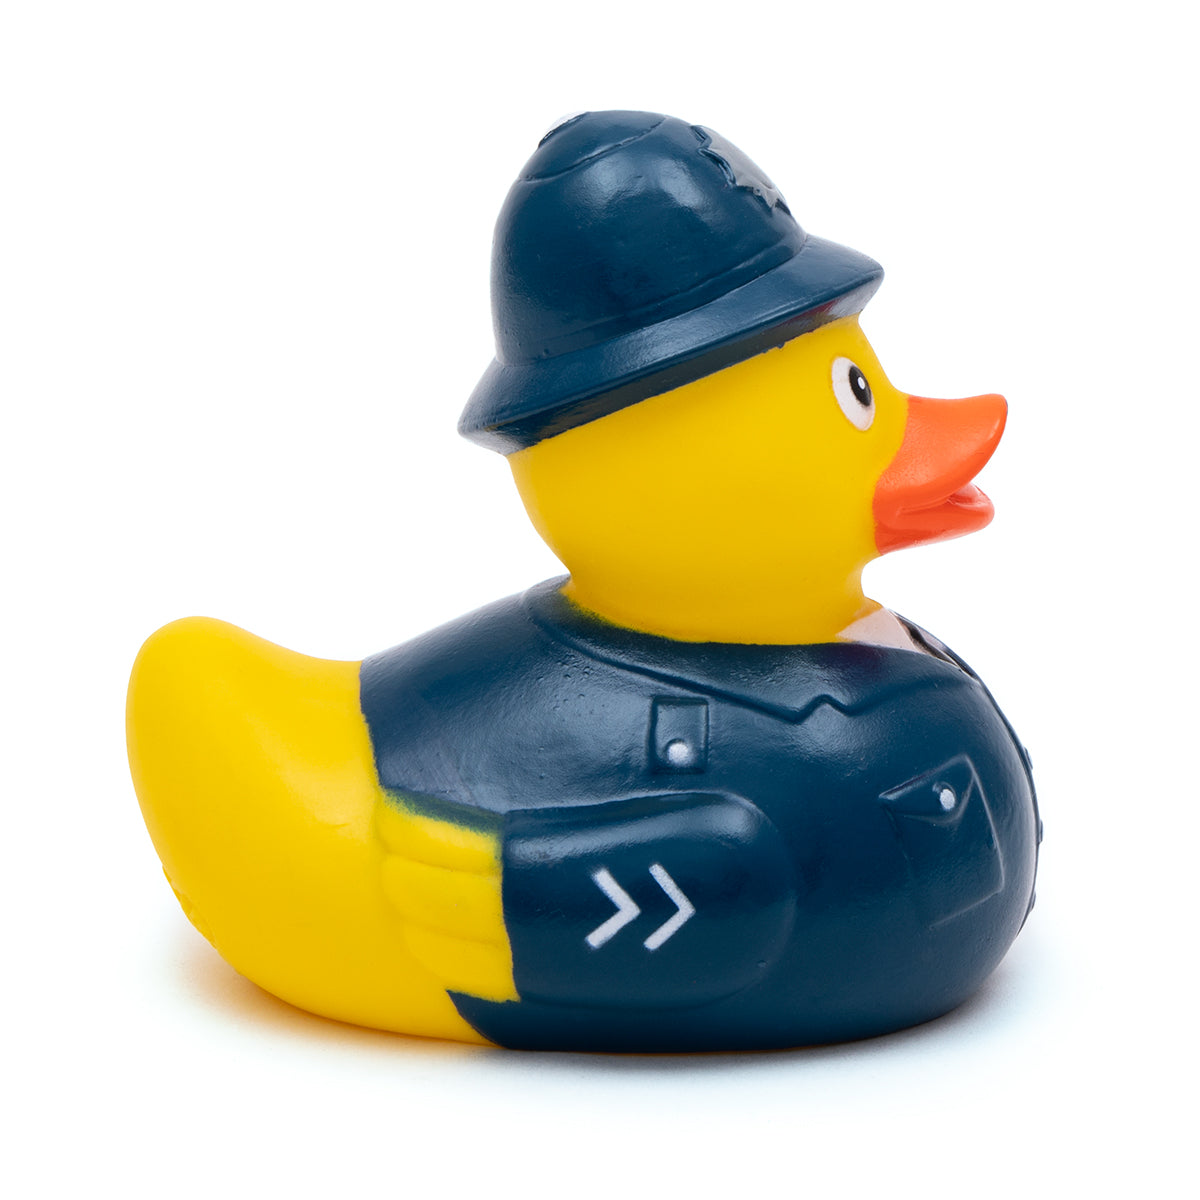 Policeman - London Rubber Ducks 2